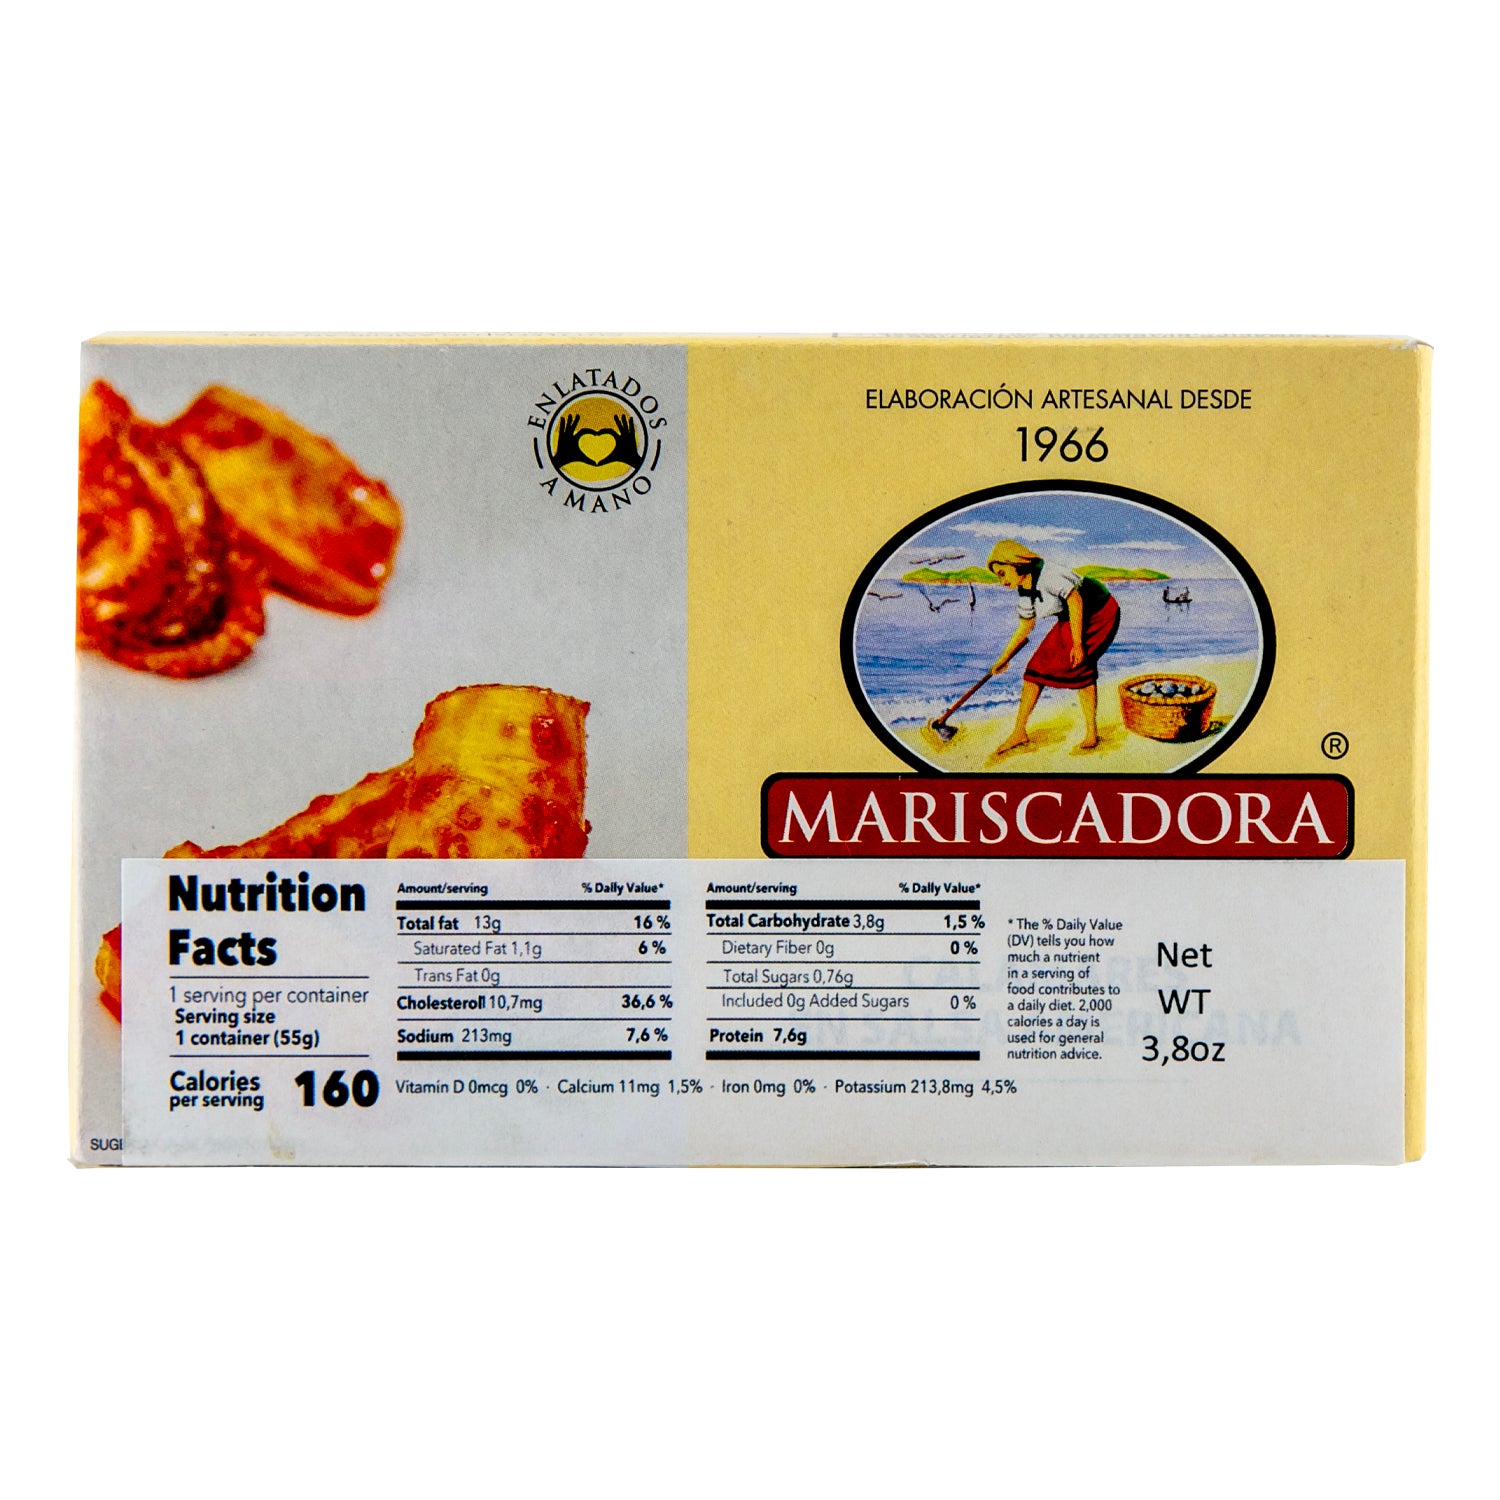 Mariscadora Squids (Pieces) in American sauce